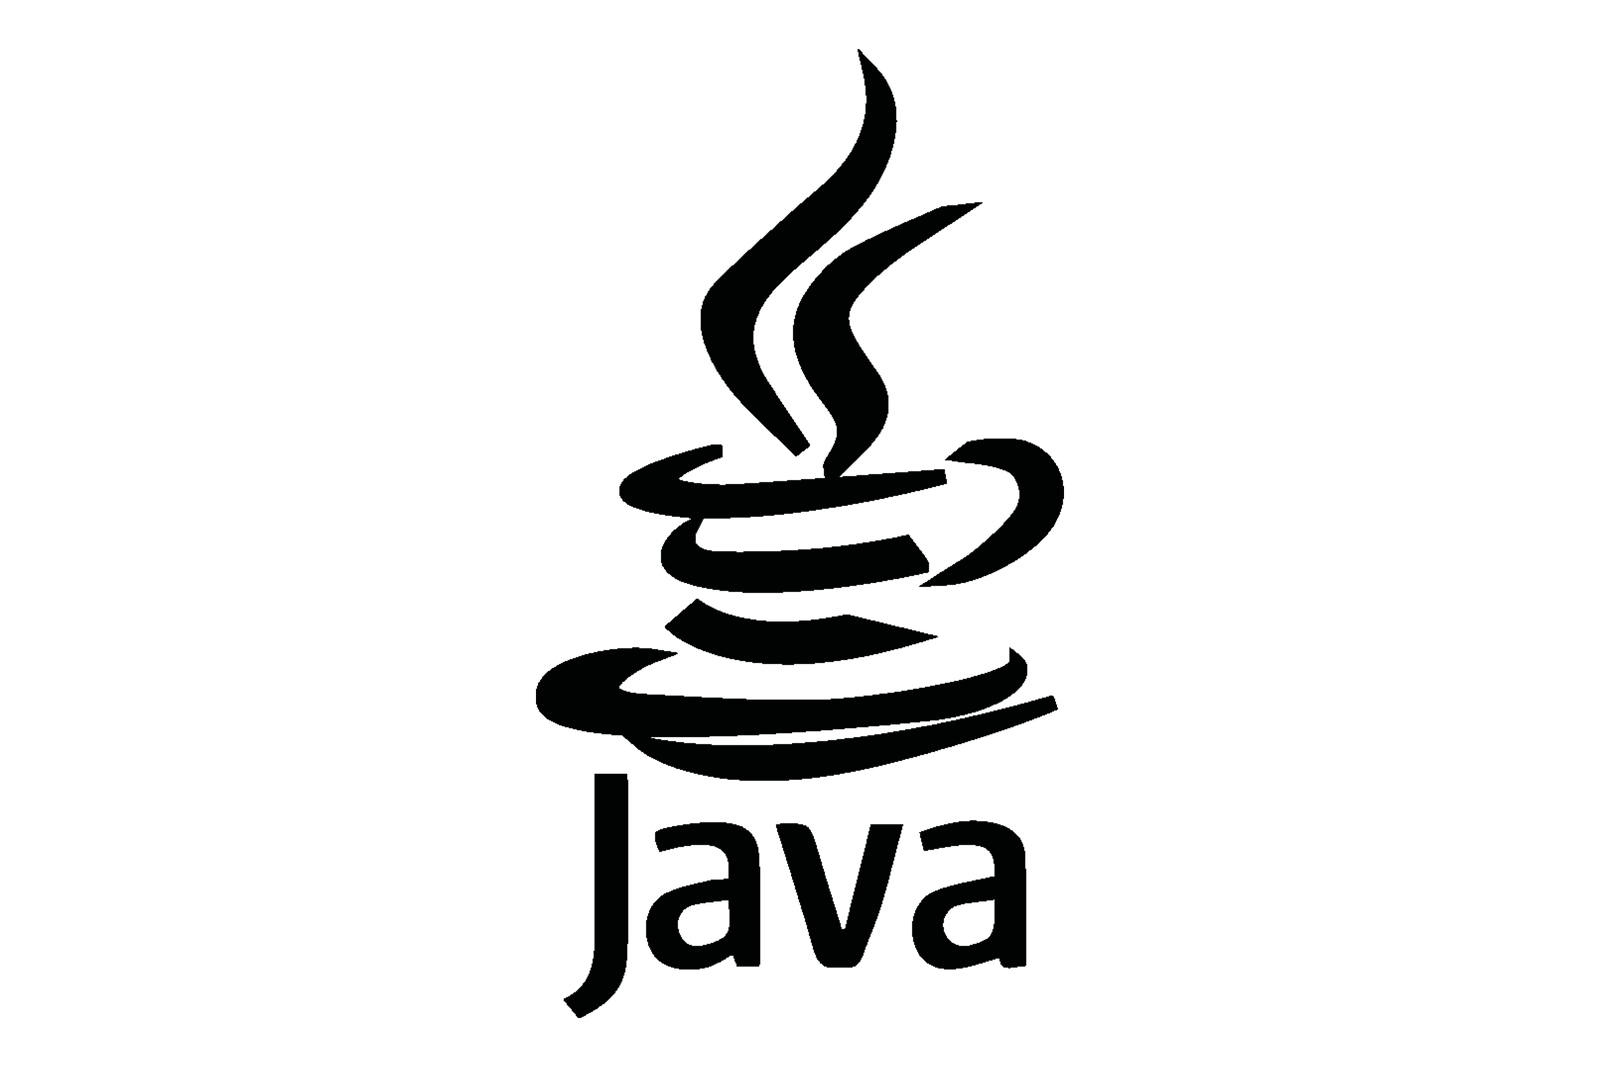 Java под. Java логотип. Значок java. Логотип джава. Java вектор.